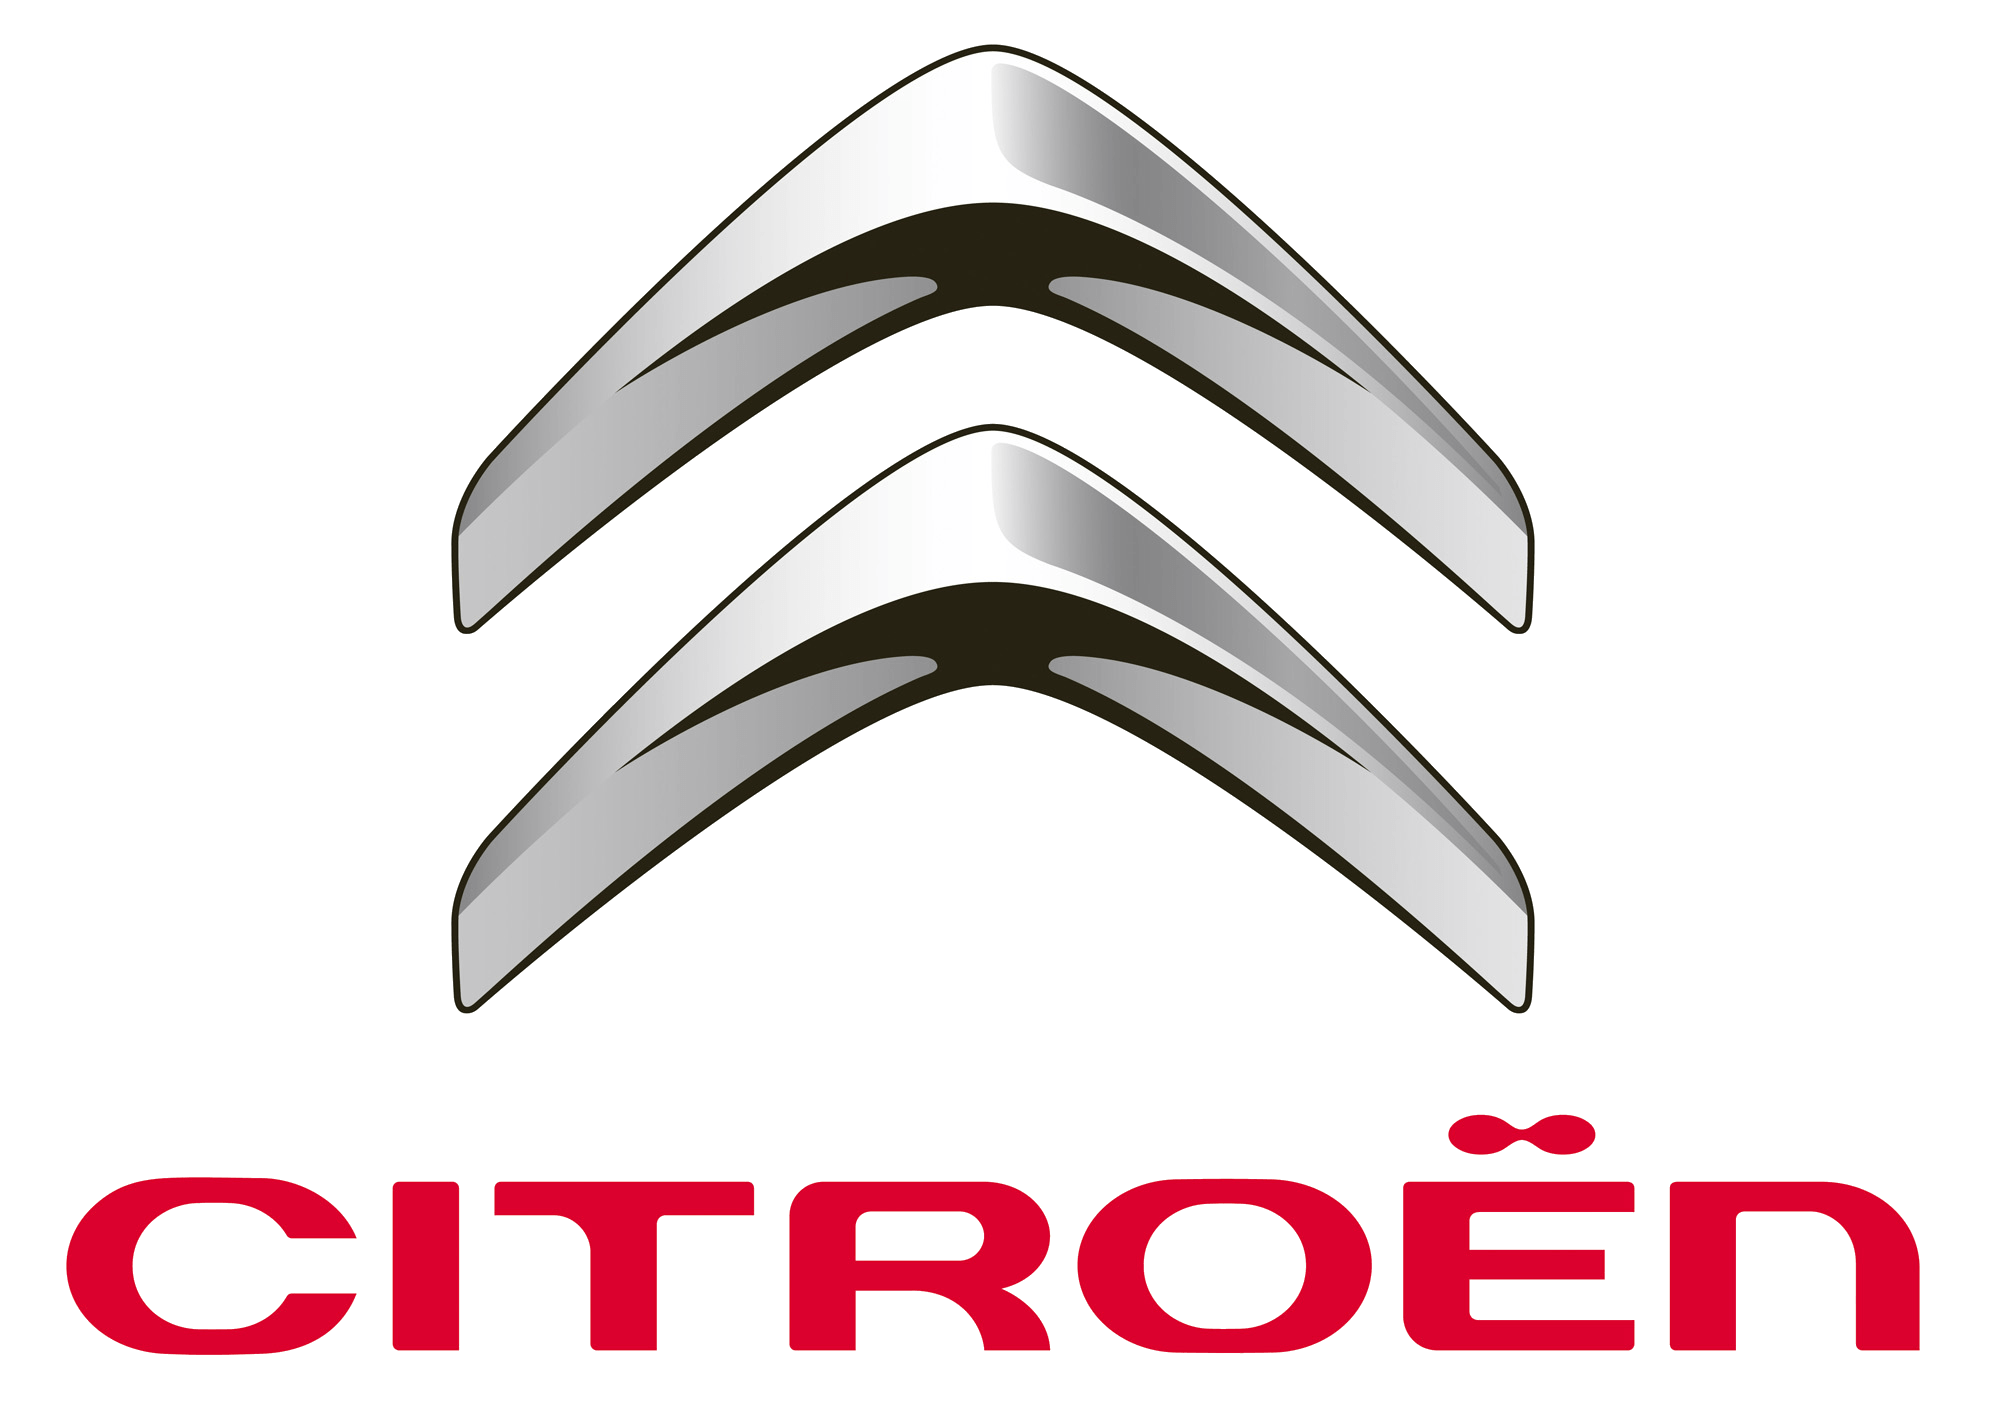 2 Silver Arrows Logo - Citroen Logo, Citroen Car Symbol Meaning and History | Car Brand ...